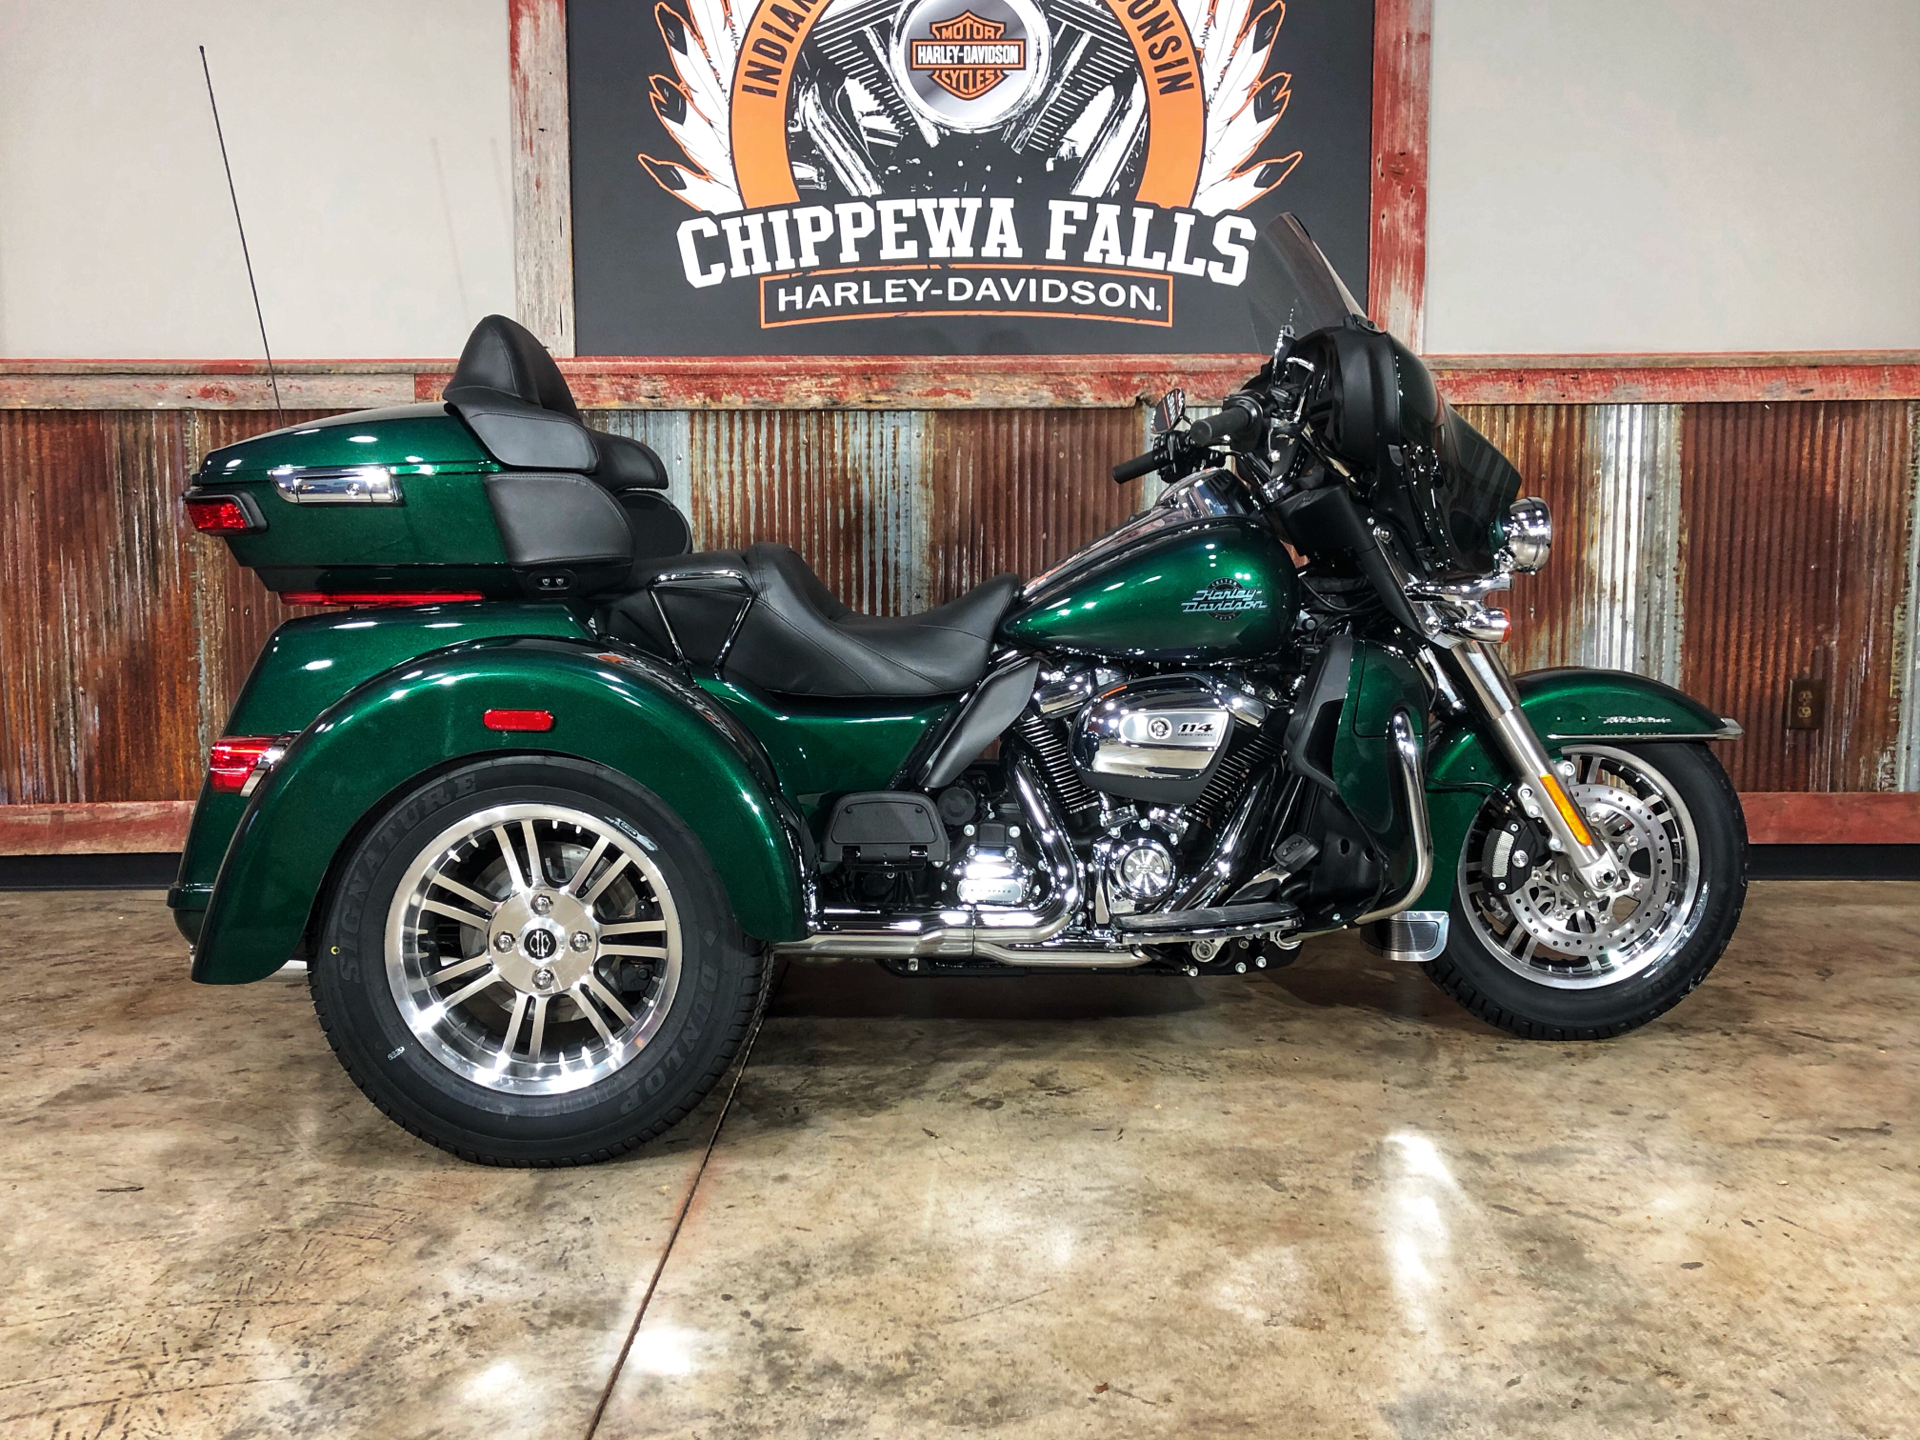 New 2021 Harley Davidson Tri Glide Ultra Snake Venom Motorcycles In Chippewa Falls Wi Tk854087